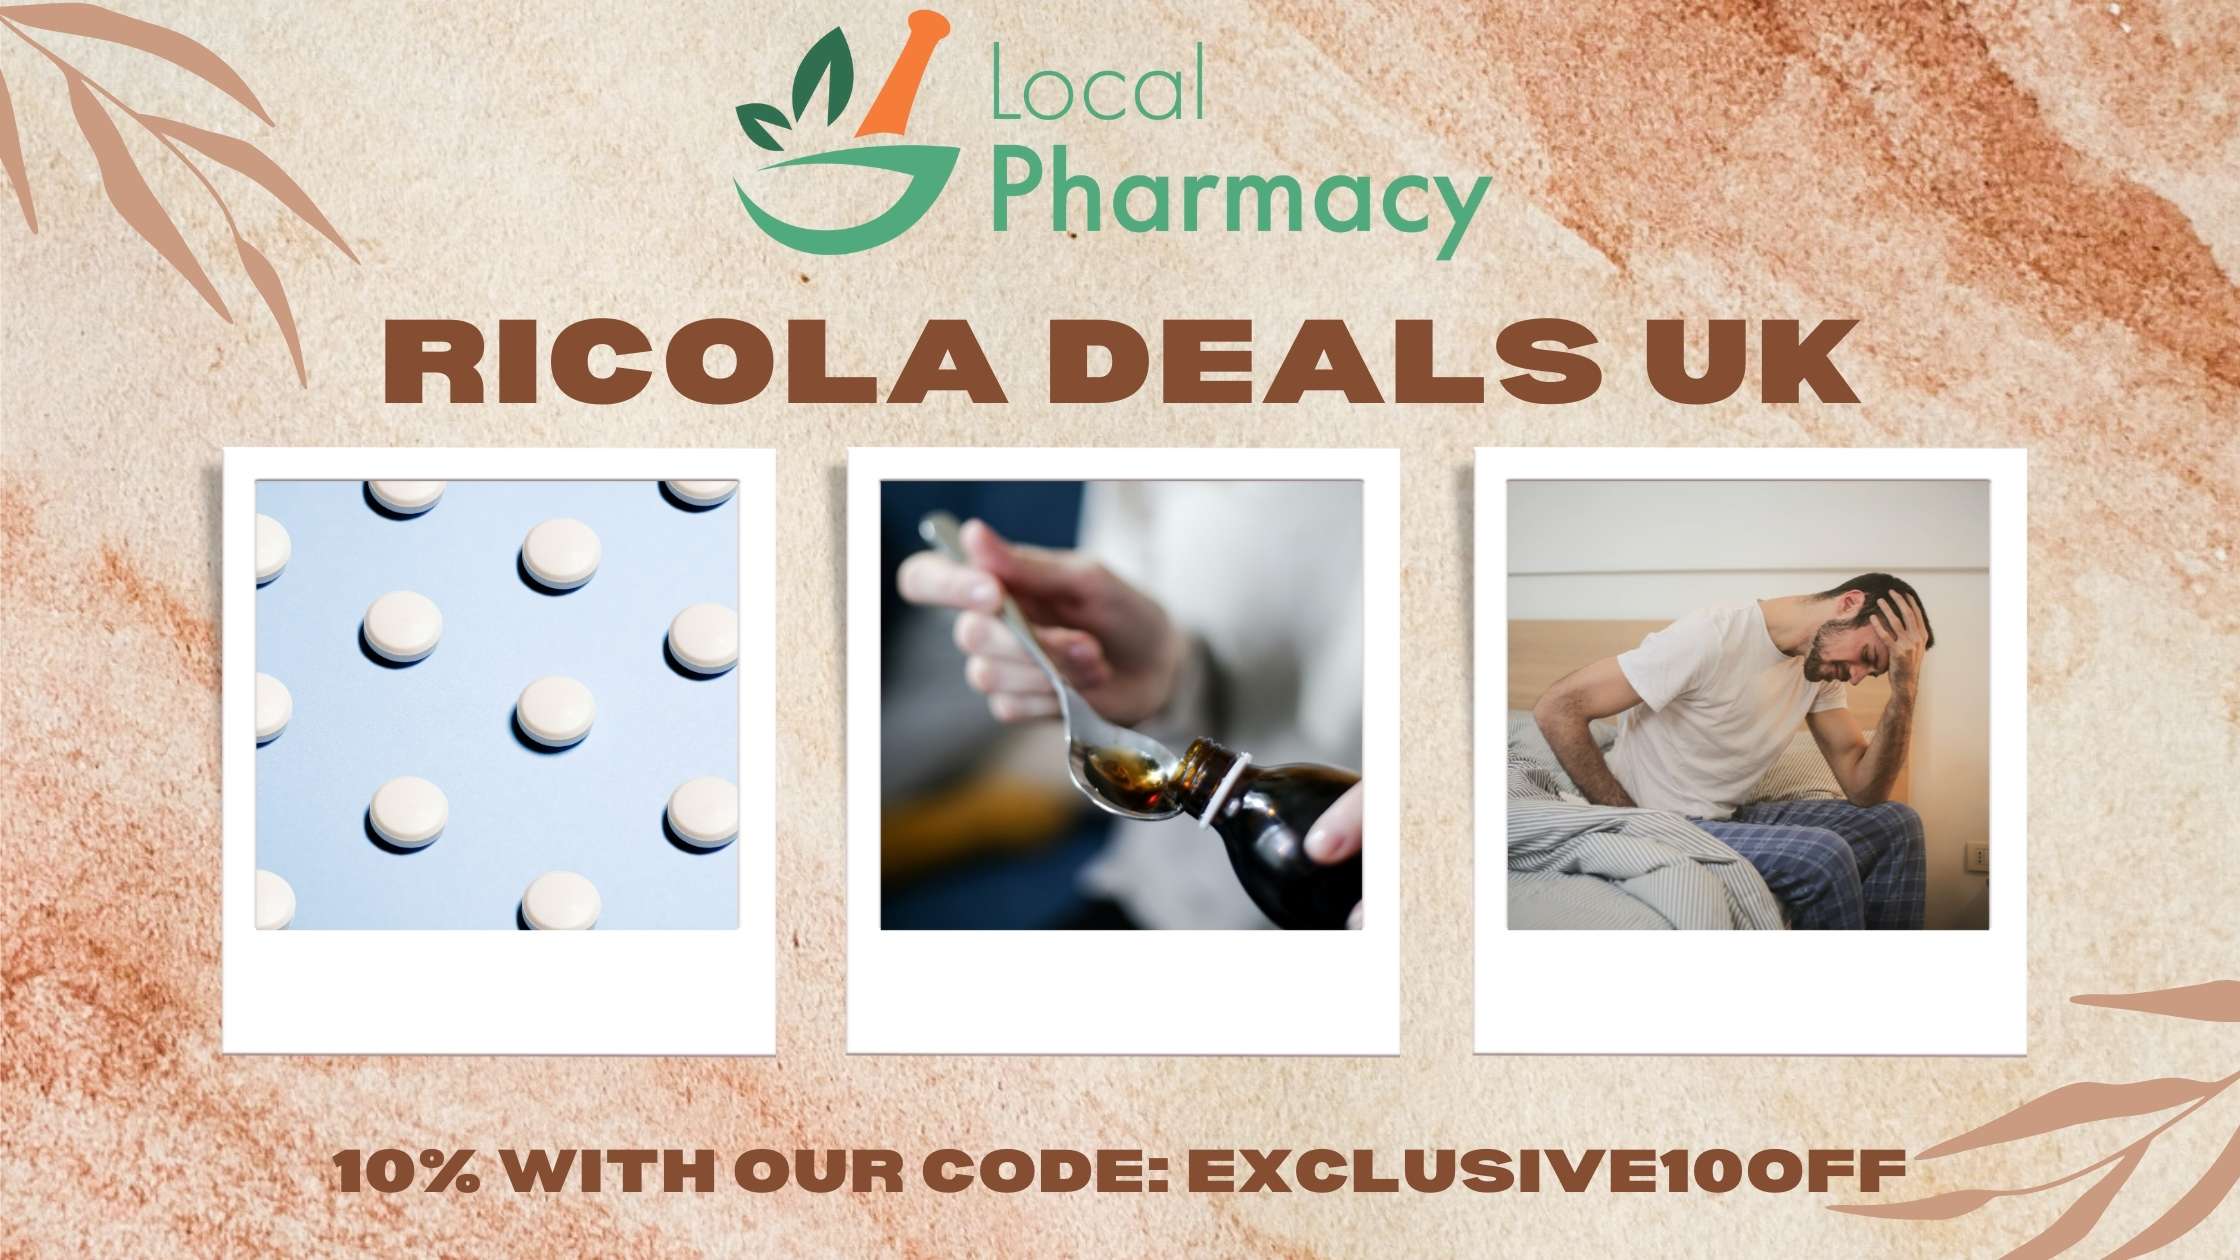 Ricola coupon code and deals uk